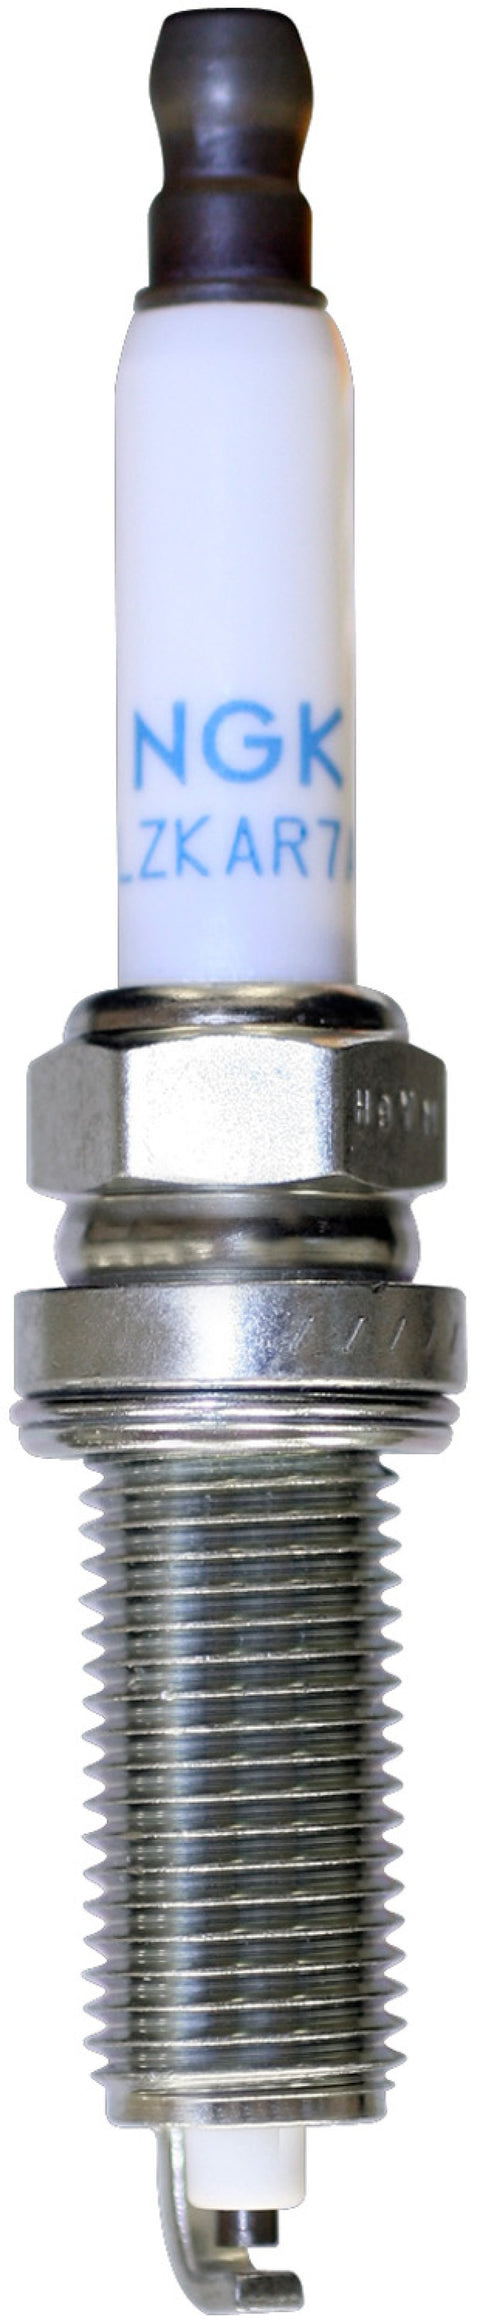 NGK Copper Core Heat Range 7 Spark Plug (6799-1)